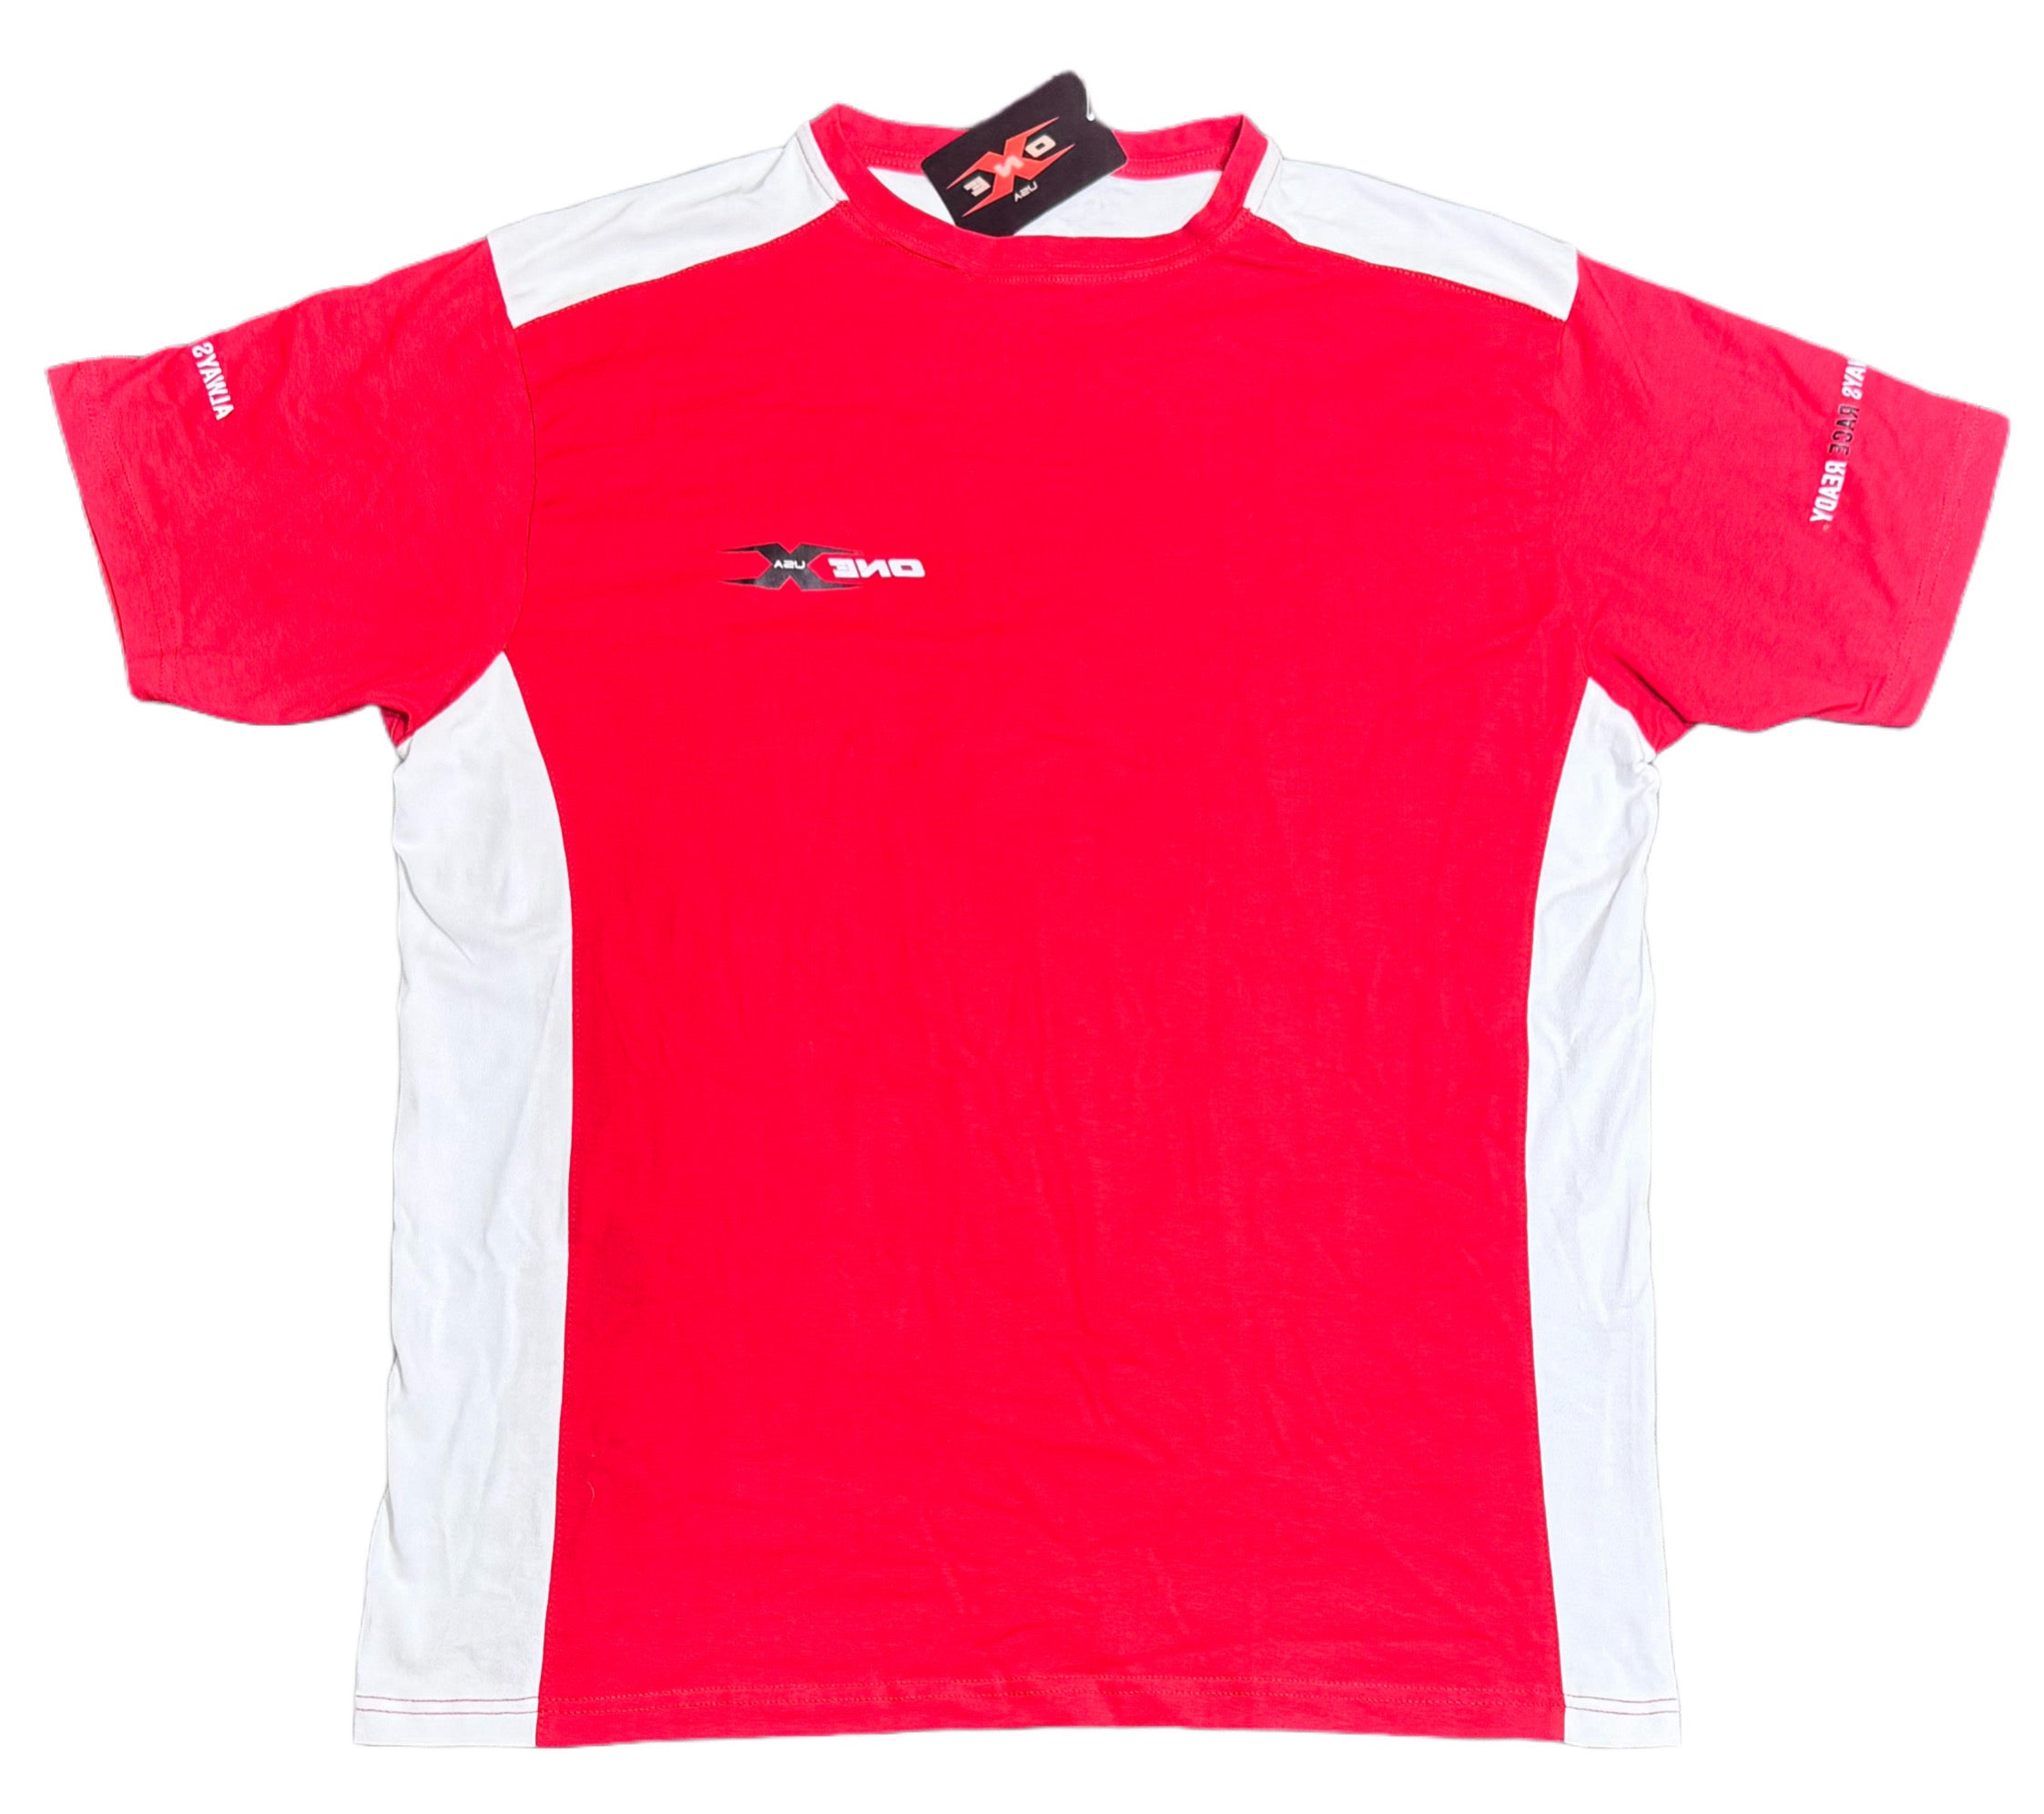 OneX USA Racing Unisex T-Shirt - Red